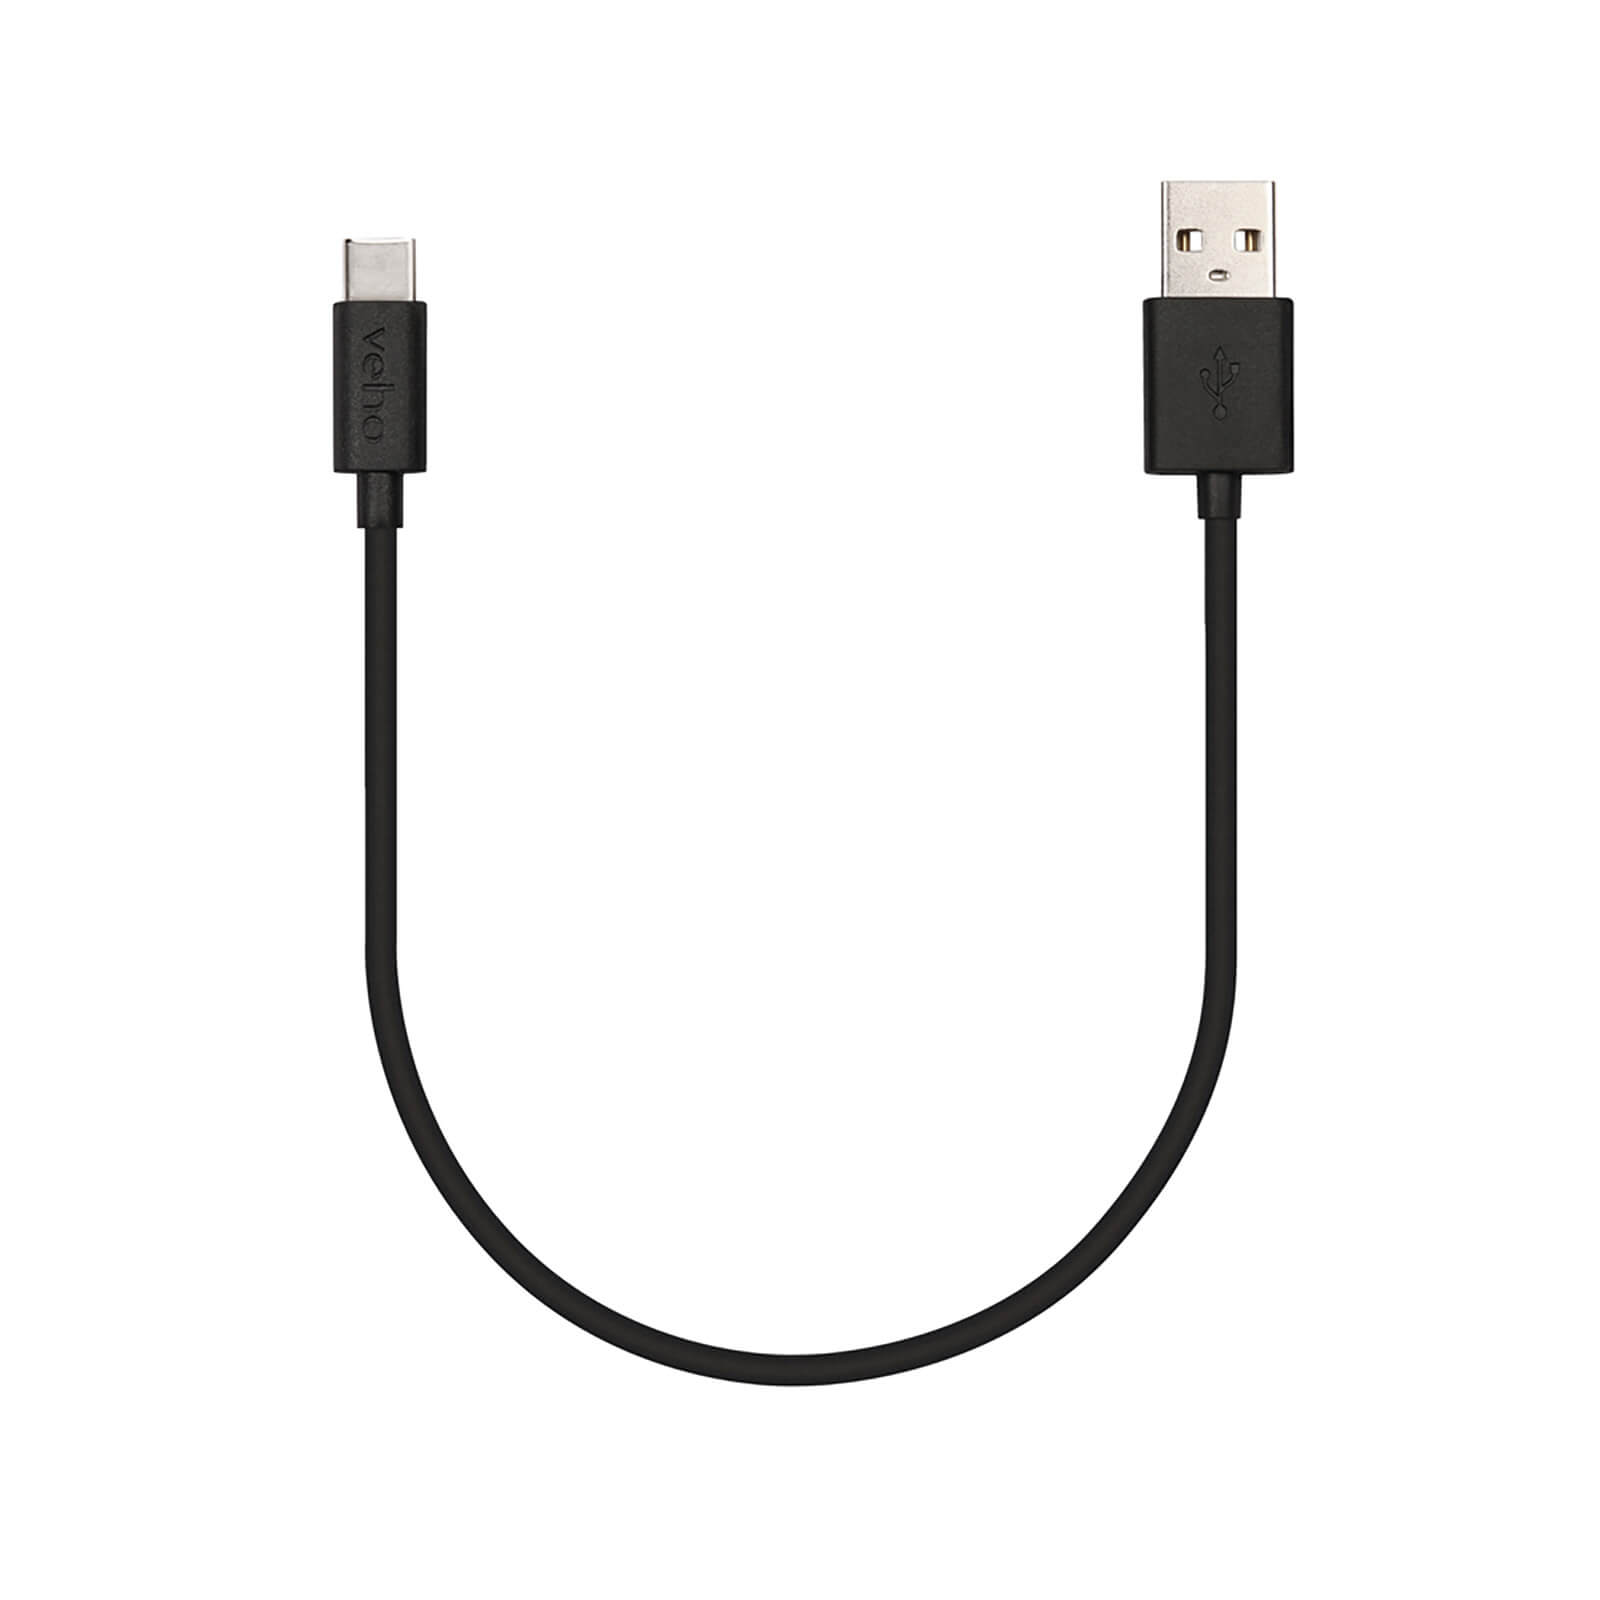 Veho 20cm USB to USB Type C Cable - Black